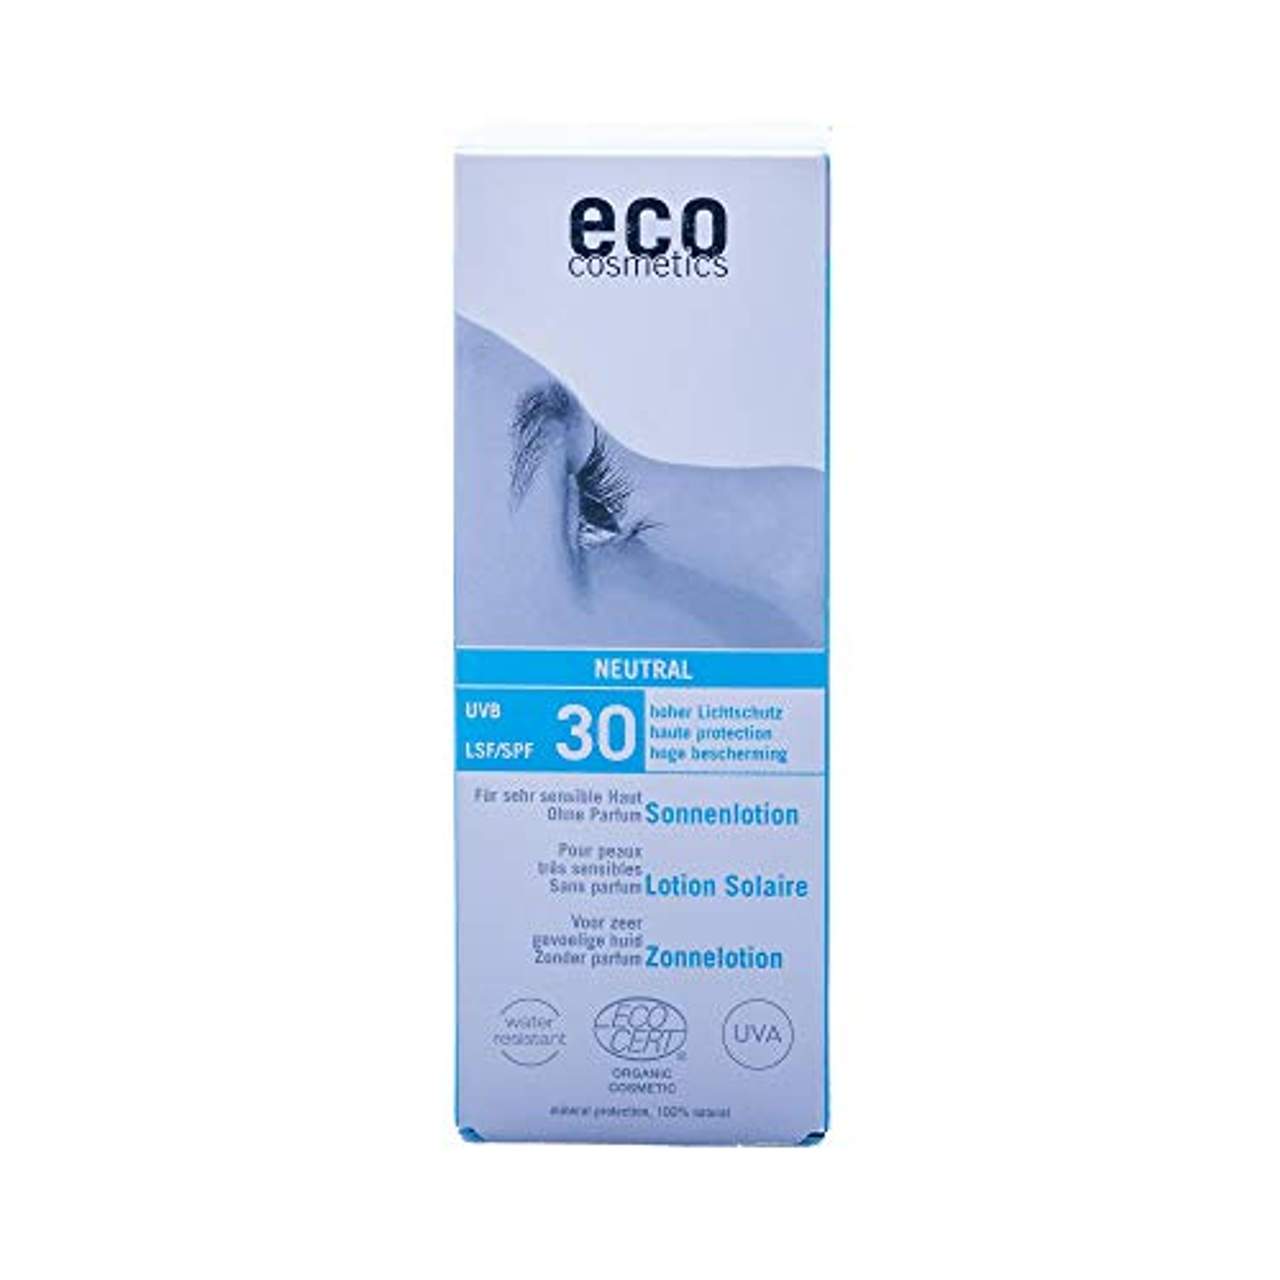 eco cosmetics: Sonnenlotion LSF 30 neutral